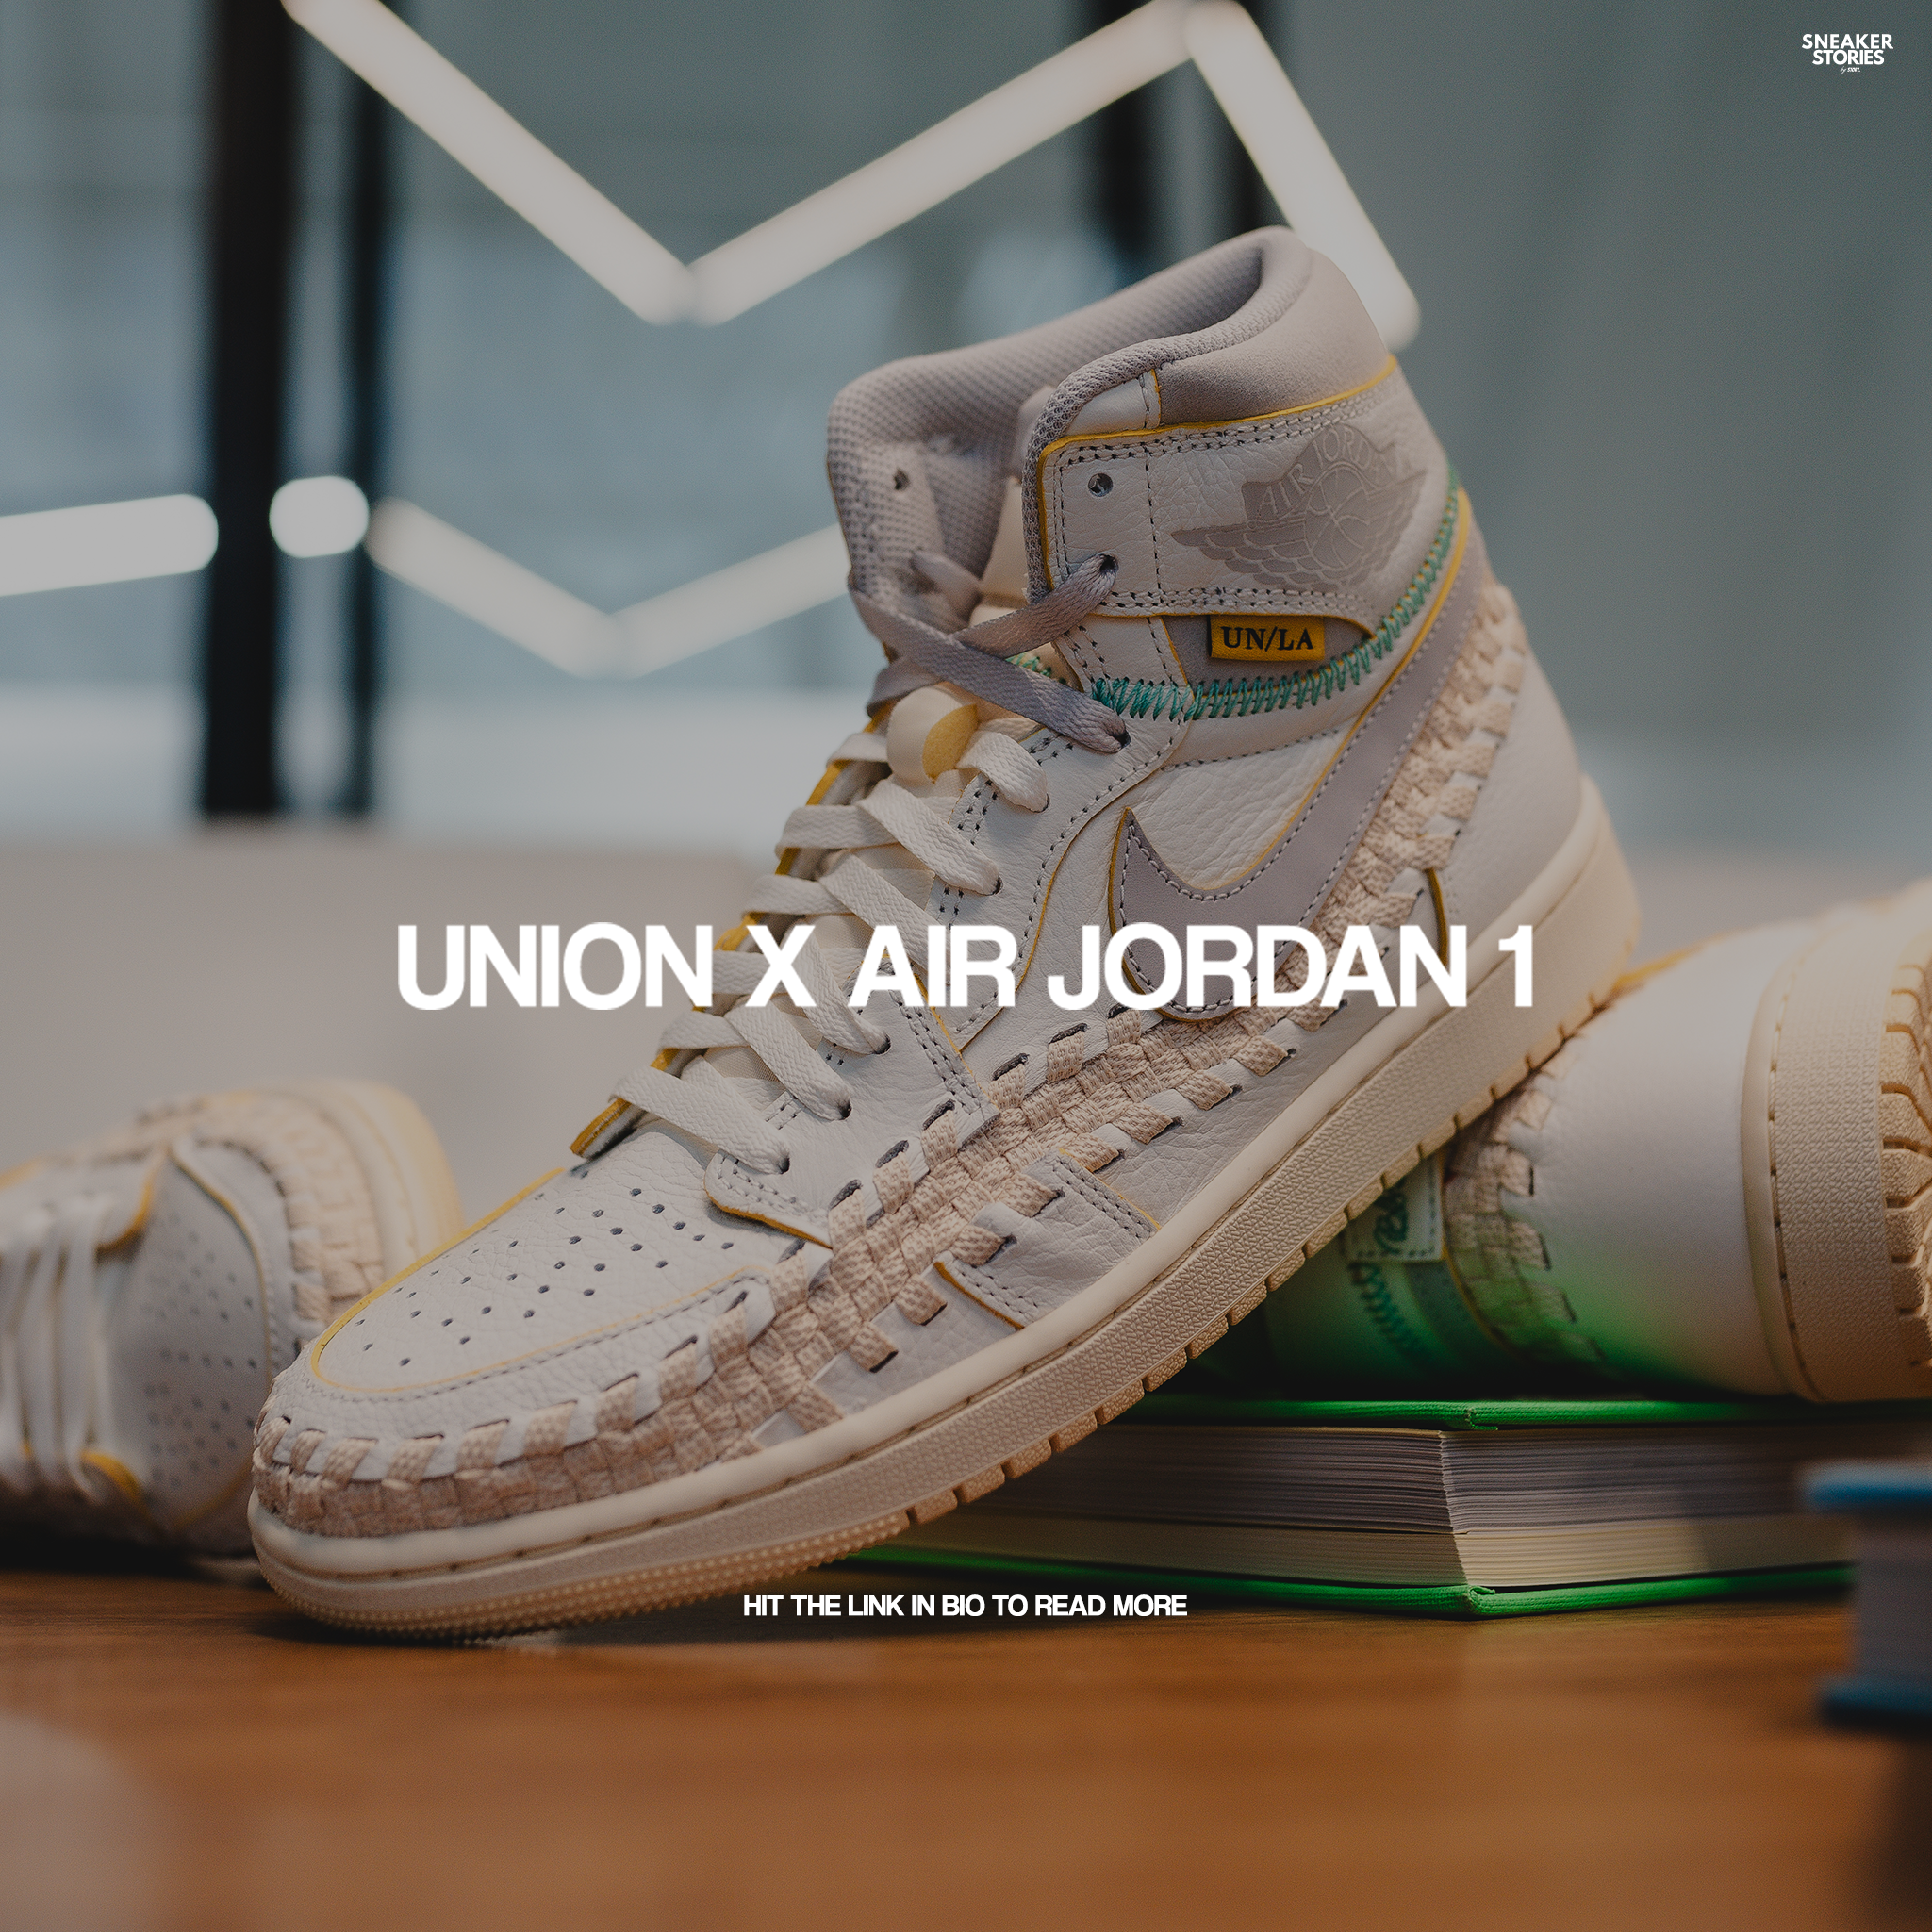 Union x Air Jordan 1